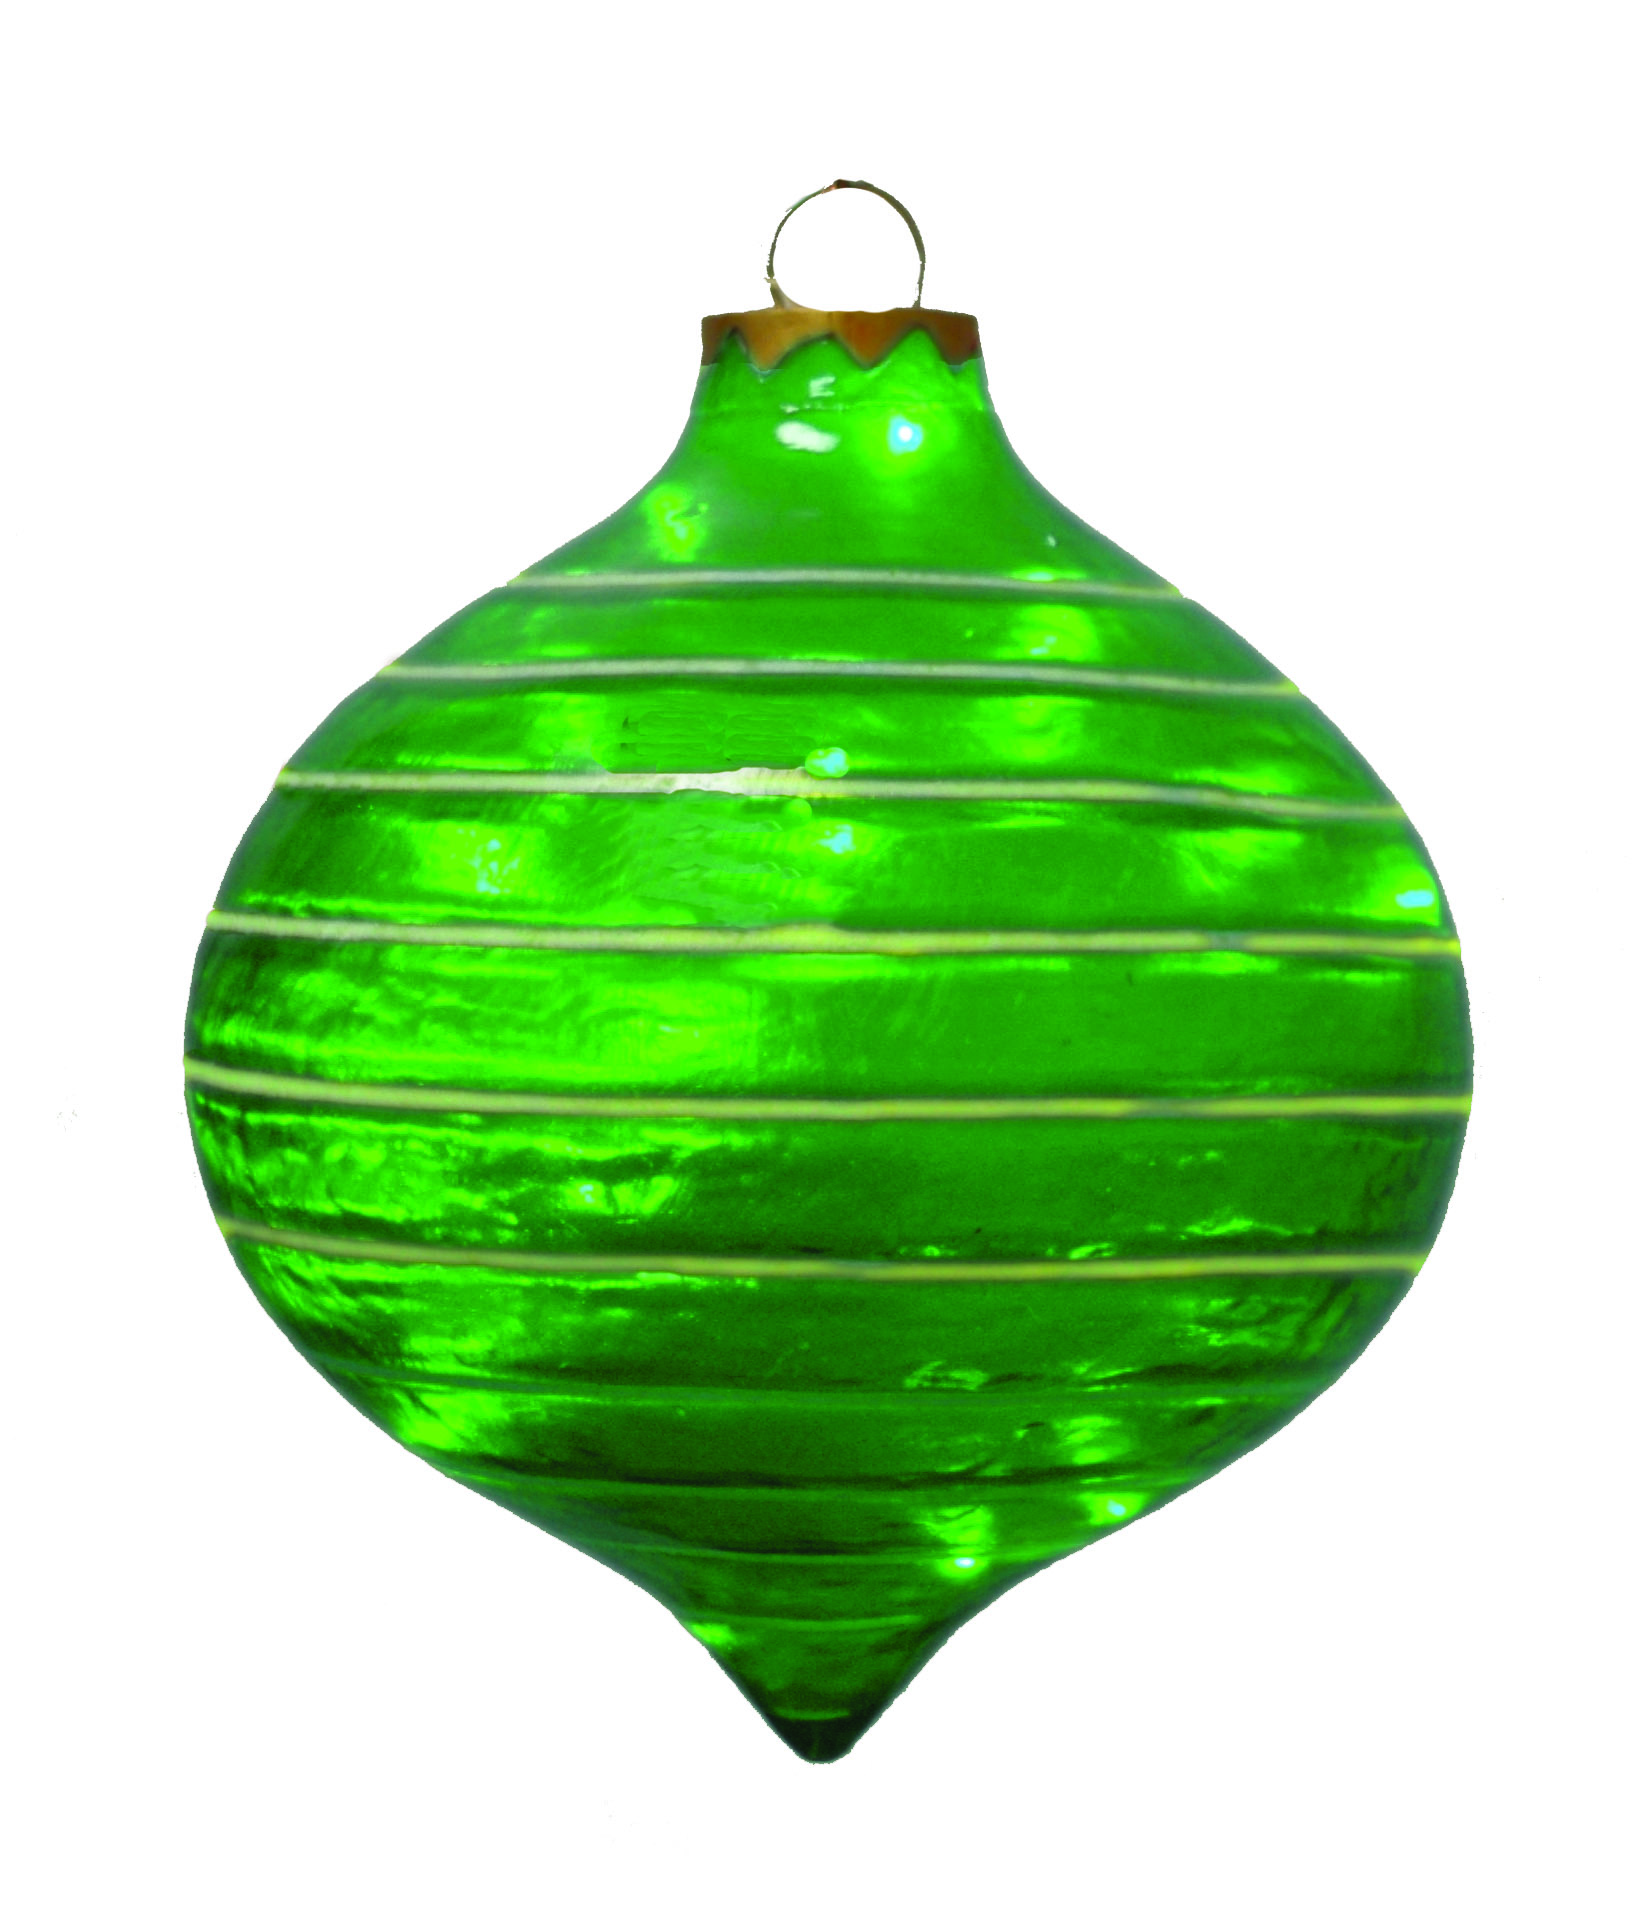 Illuminated Green Sandstone Top Ornament